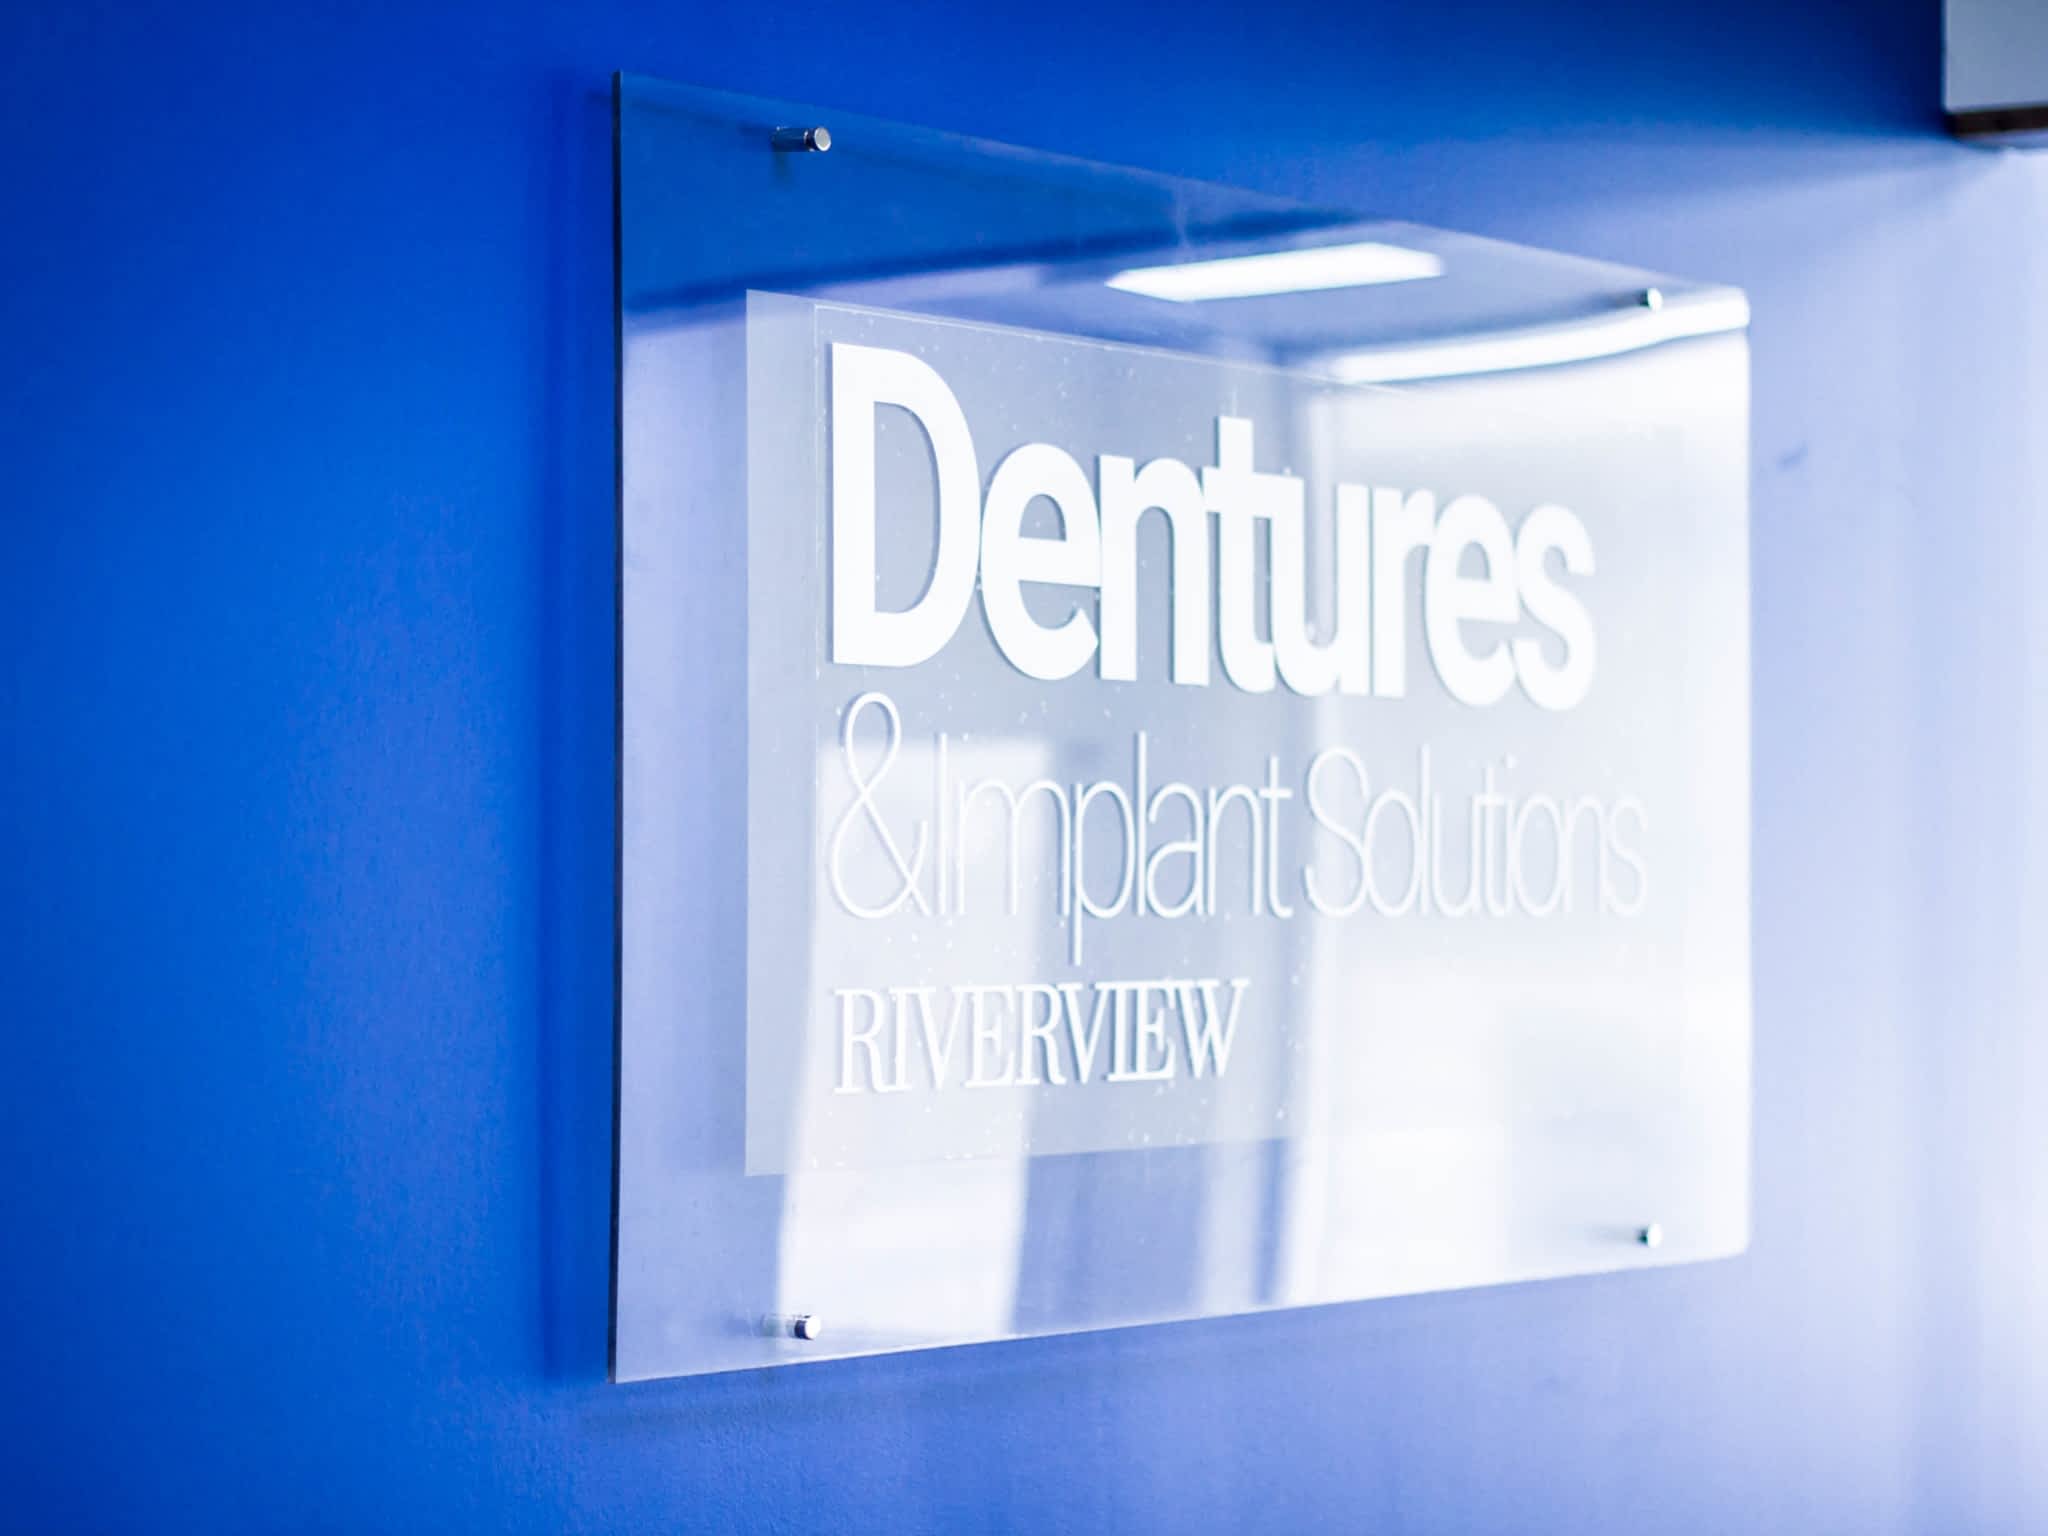 photo Dentures & Implant Solutions Riverview